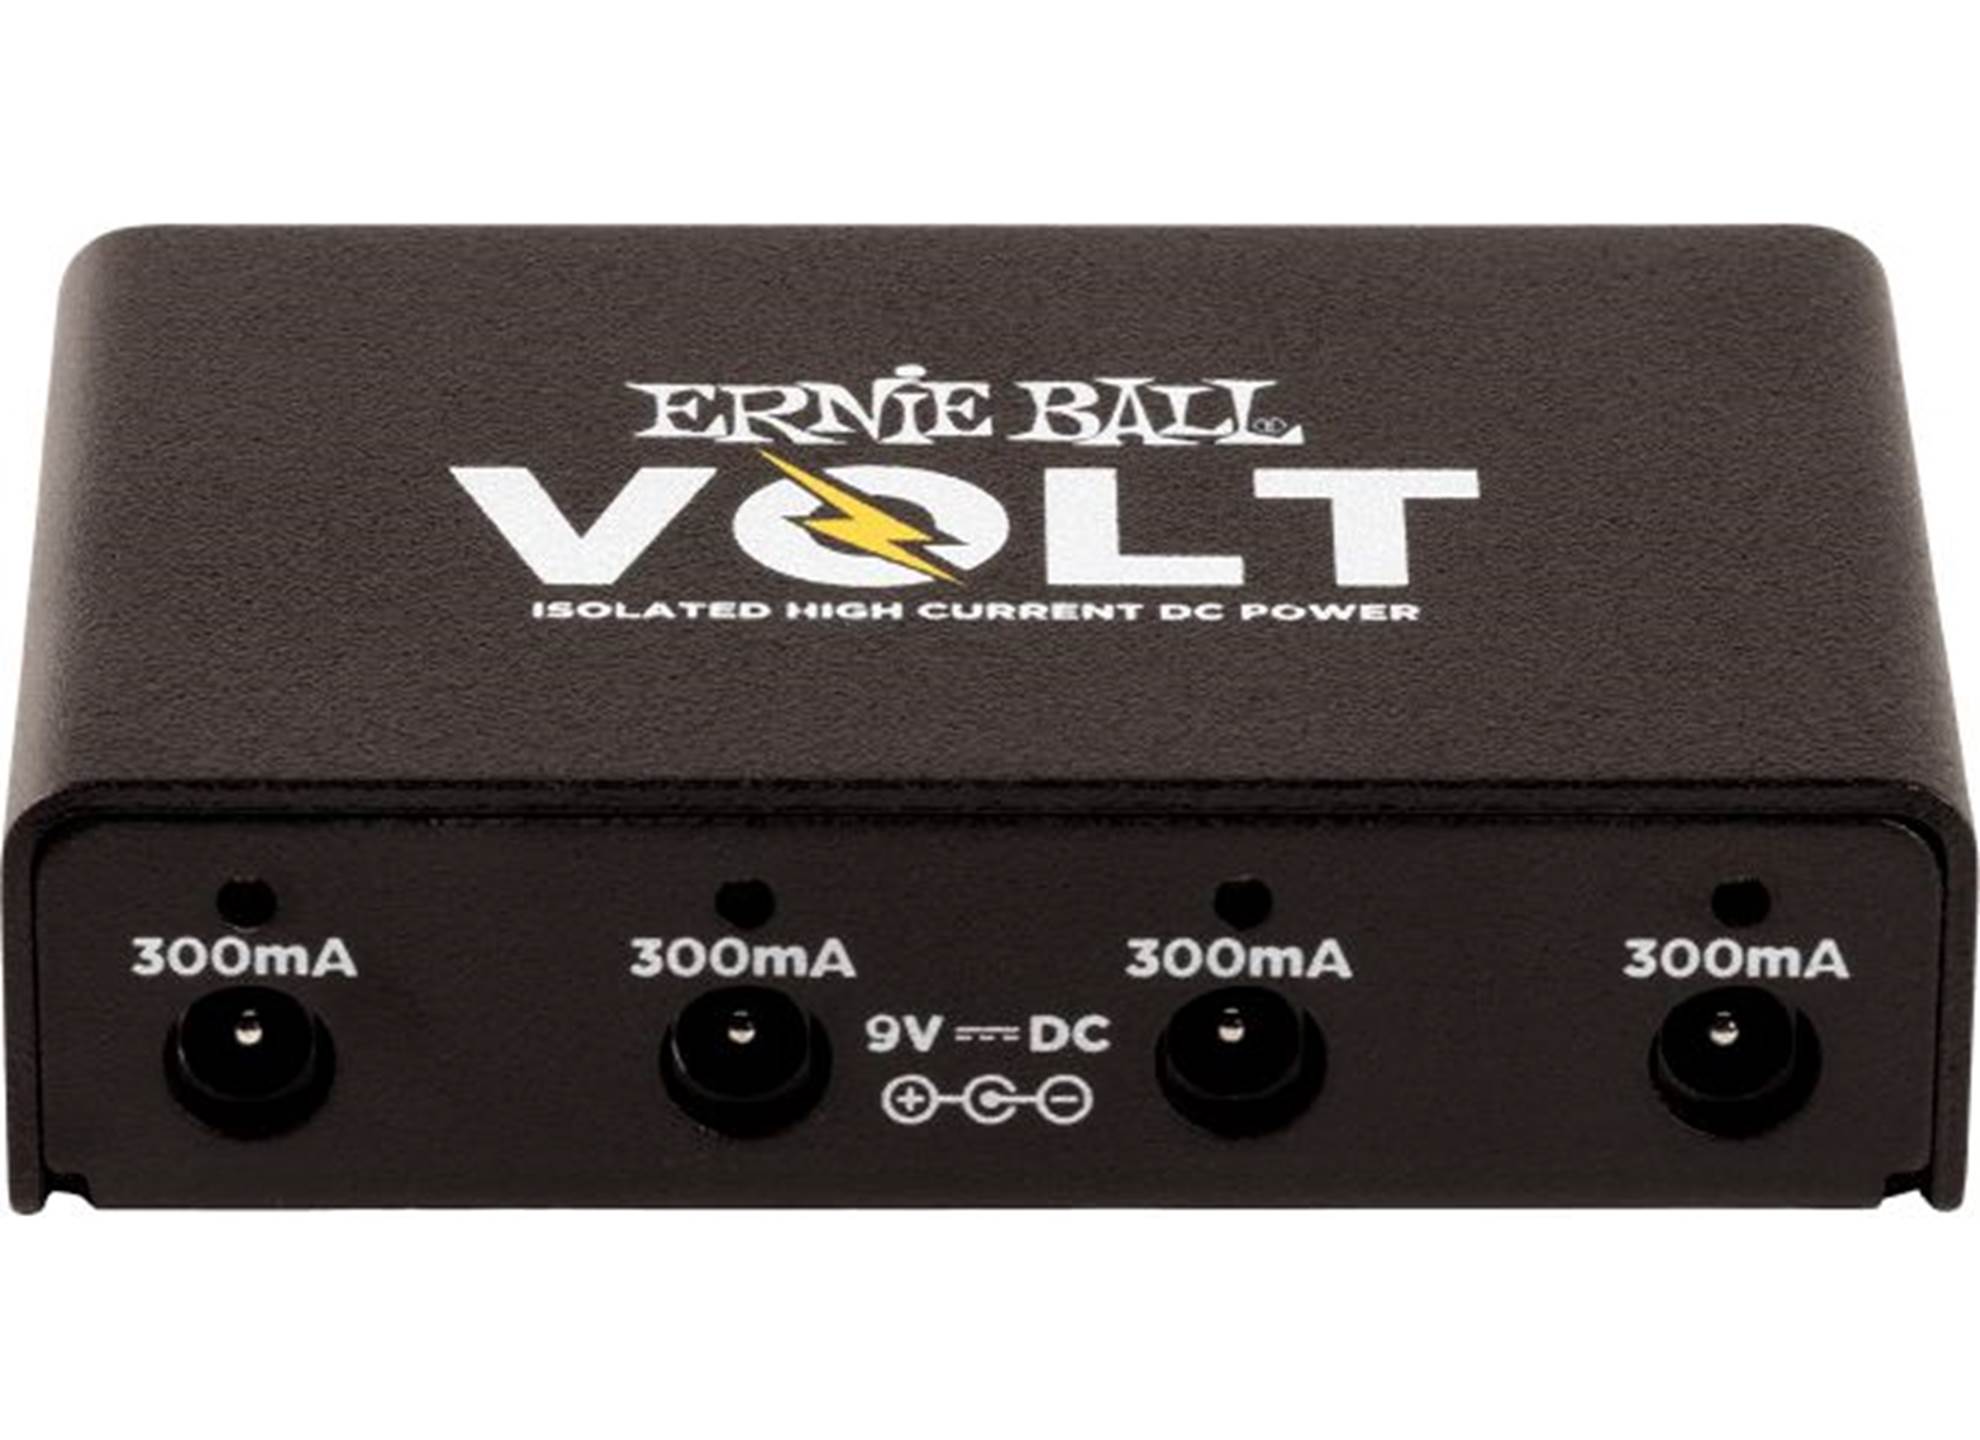 EB-6191 Volt Power Supply